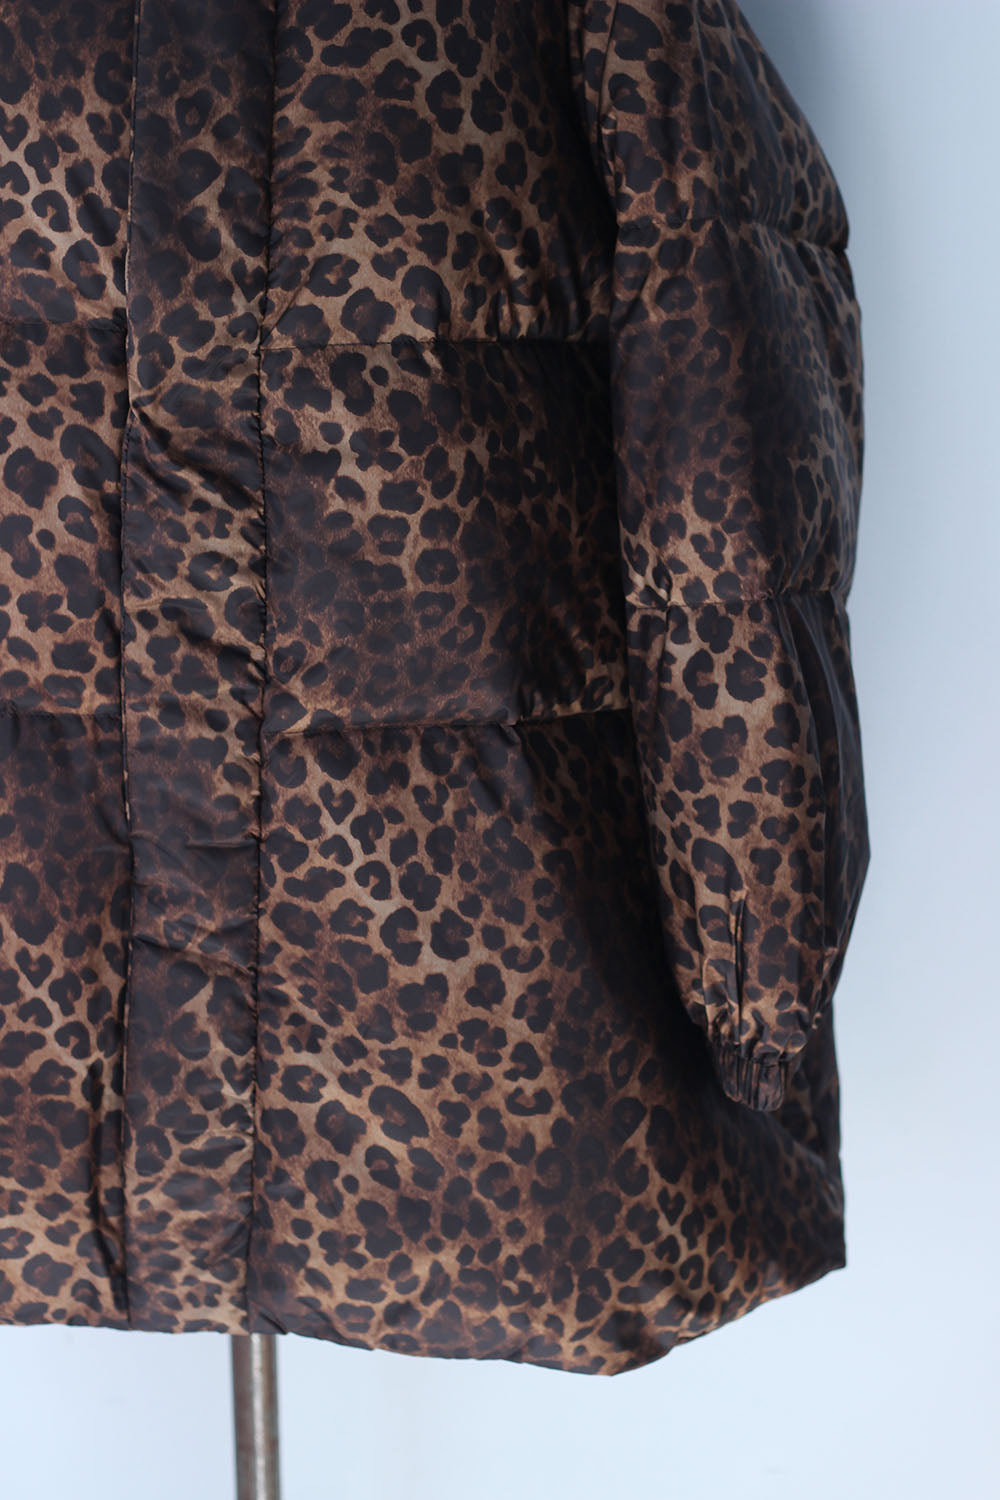 RhodolirioN "Hooded Down Jacket" (leopard)